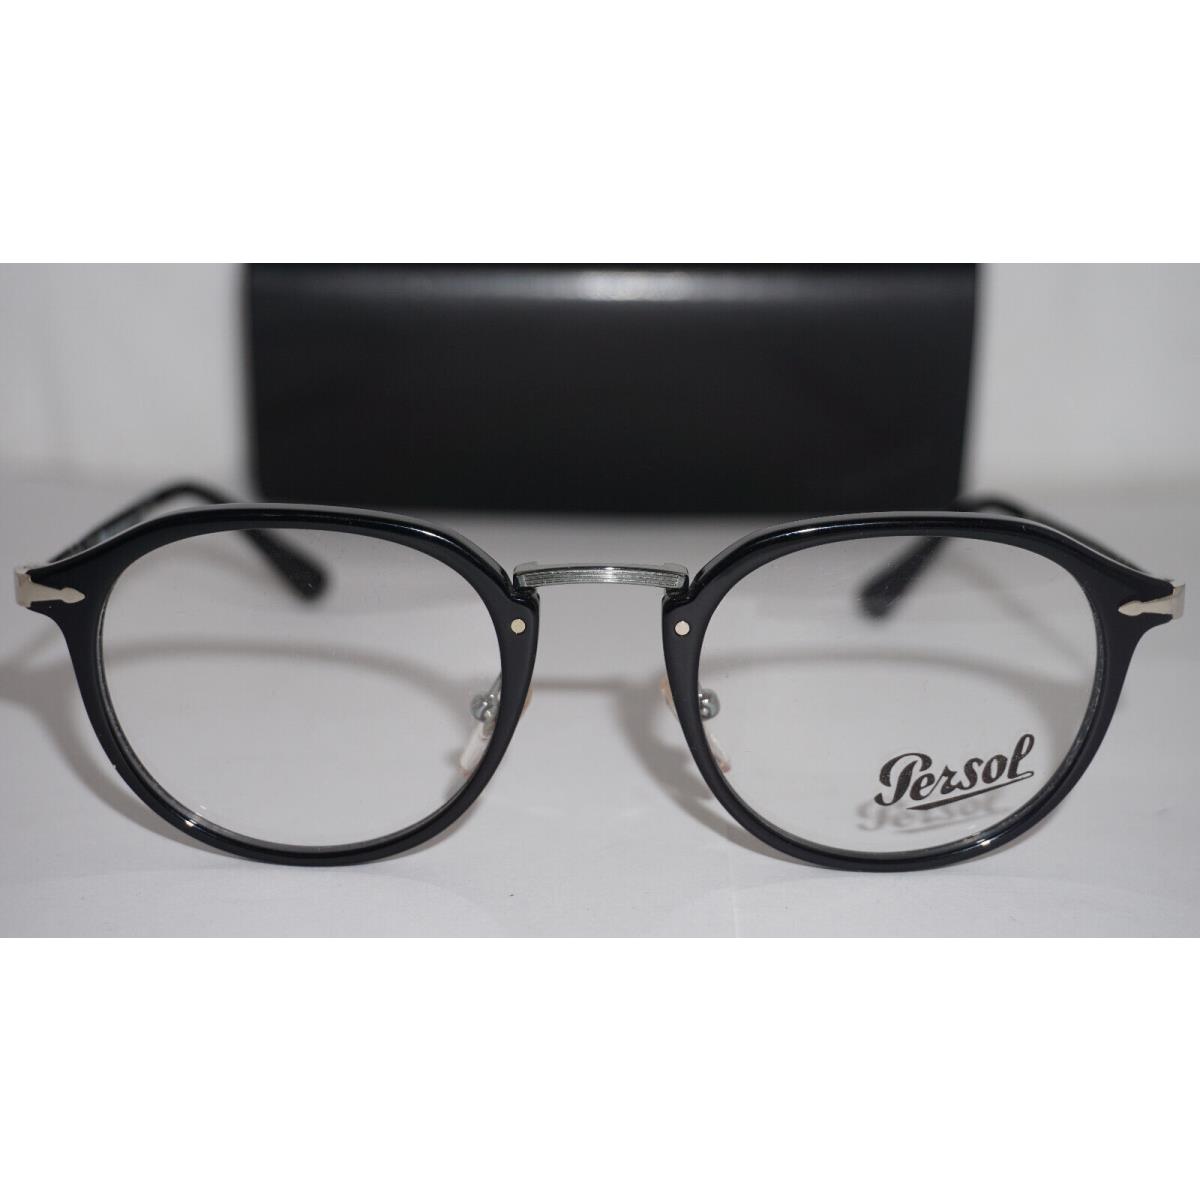 Persol Eyeglasses Calligrapher Edition Black Silver 3168-V 95 50 22 145